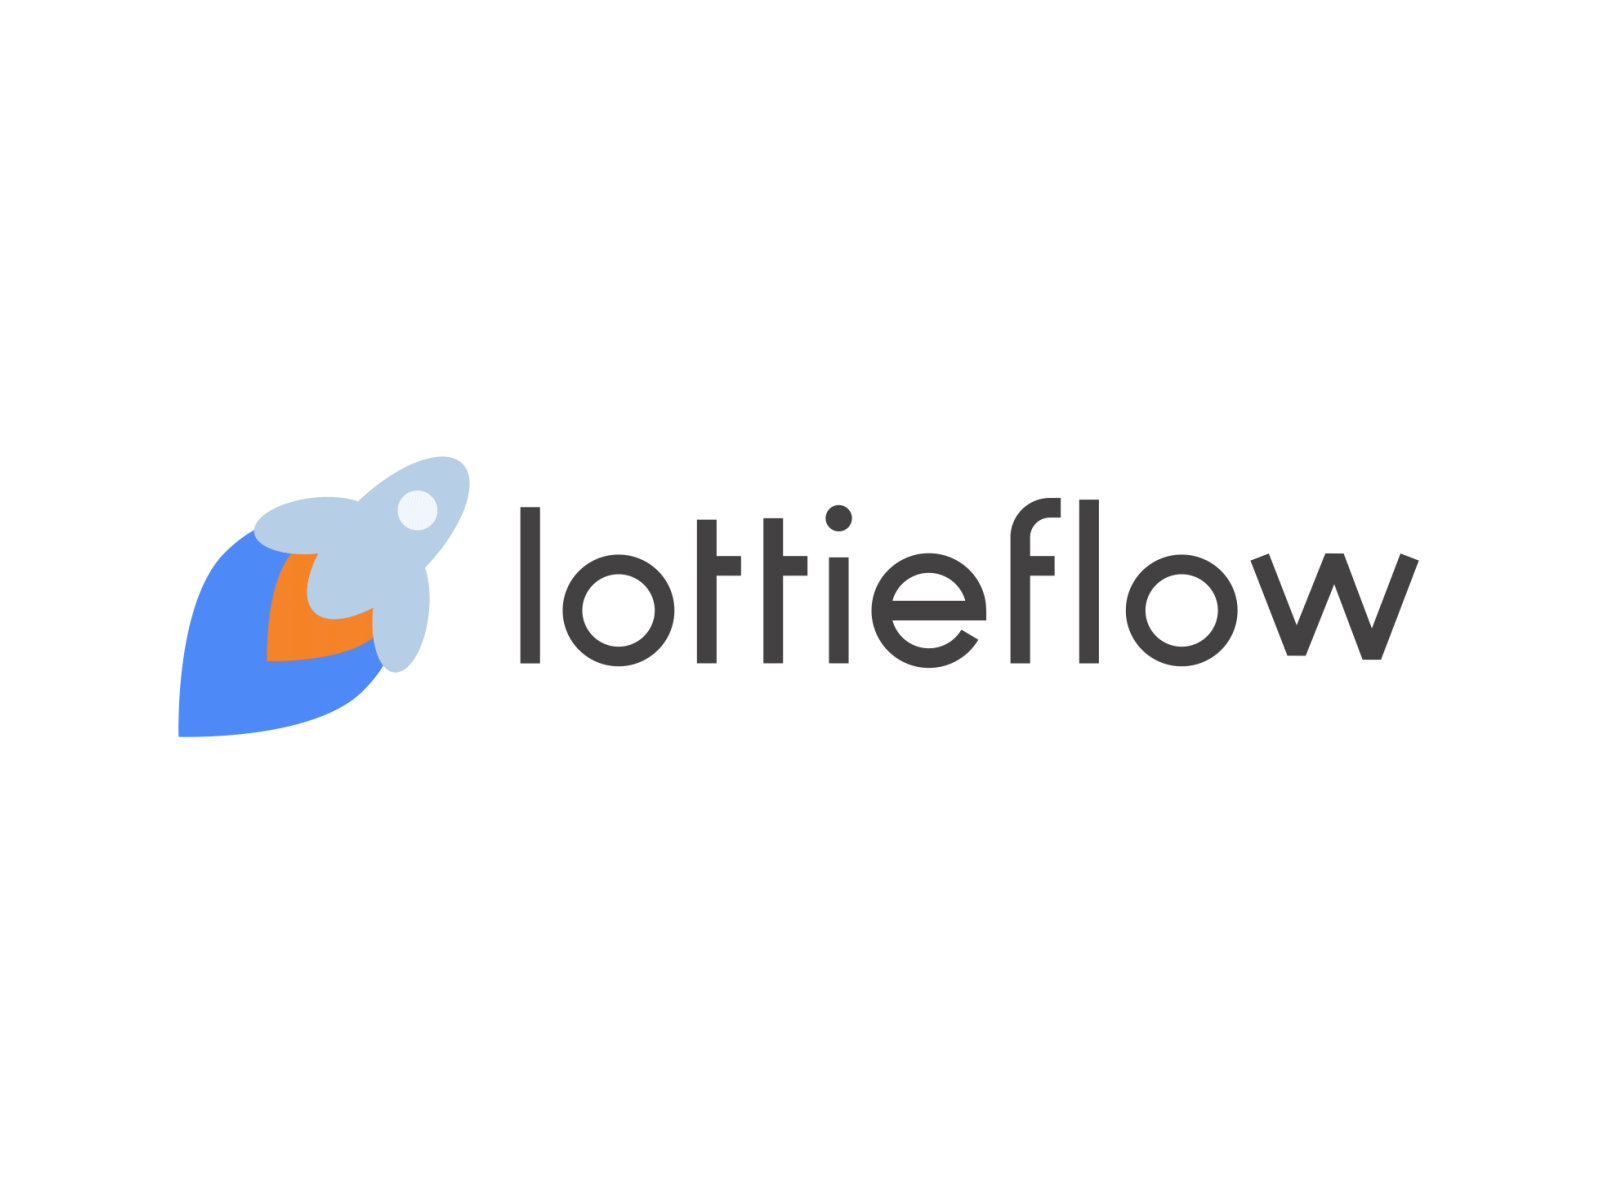 Lottieflow logo animation